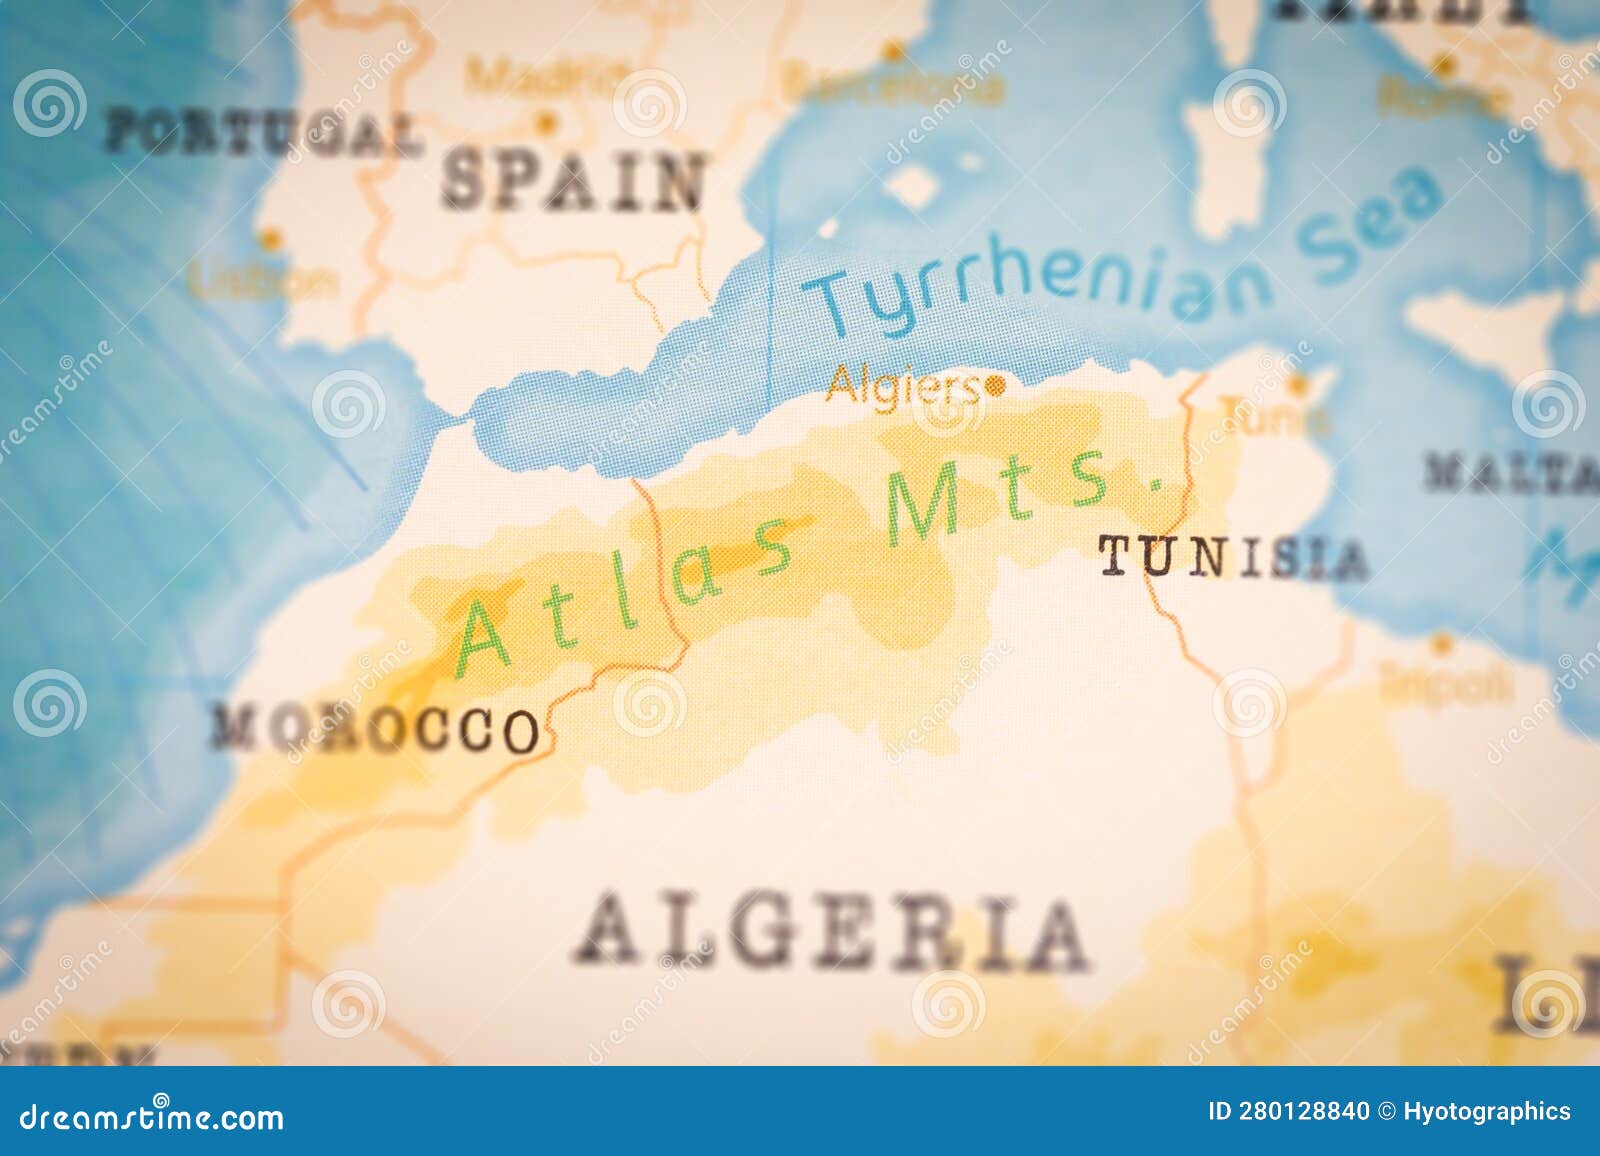 Atlas Mountains On A Map 